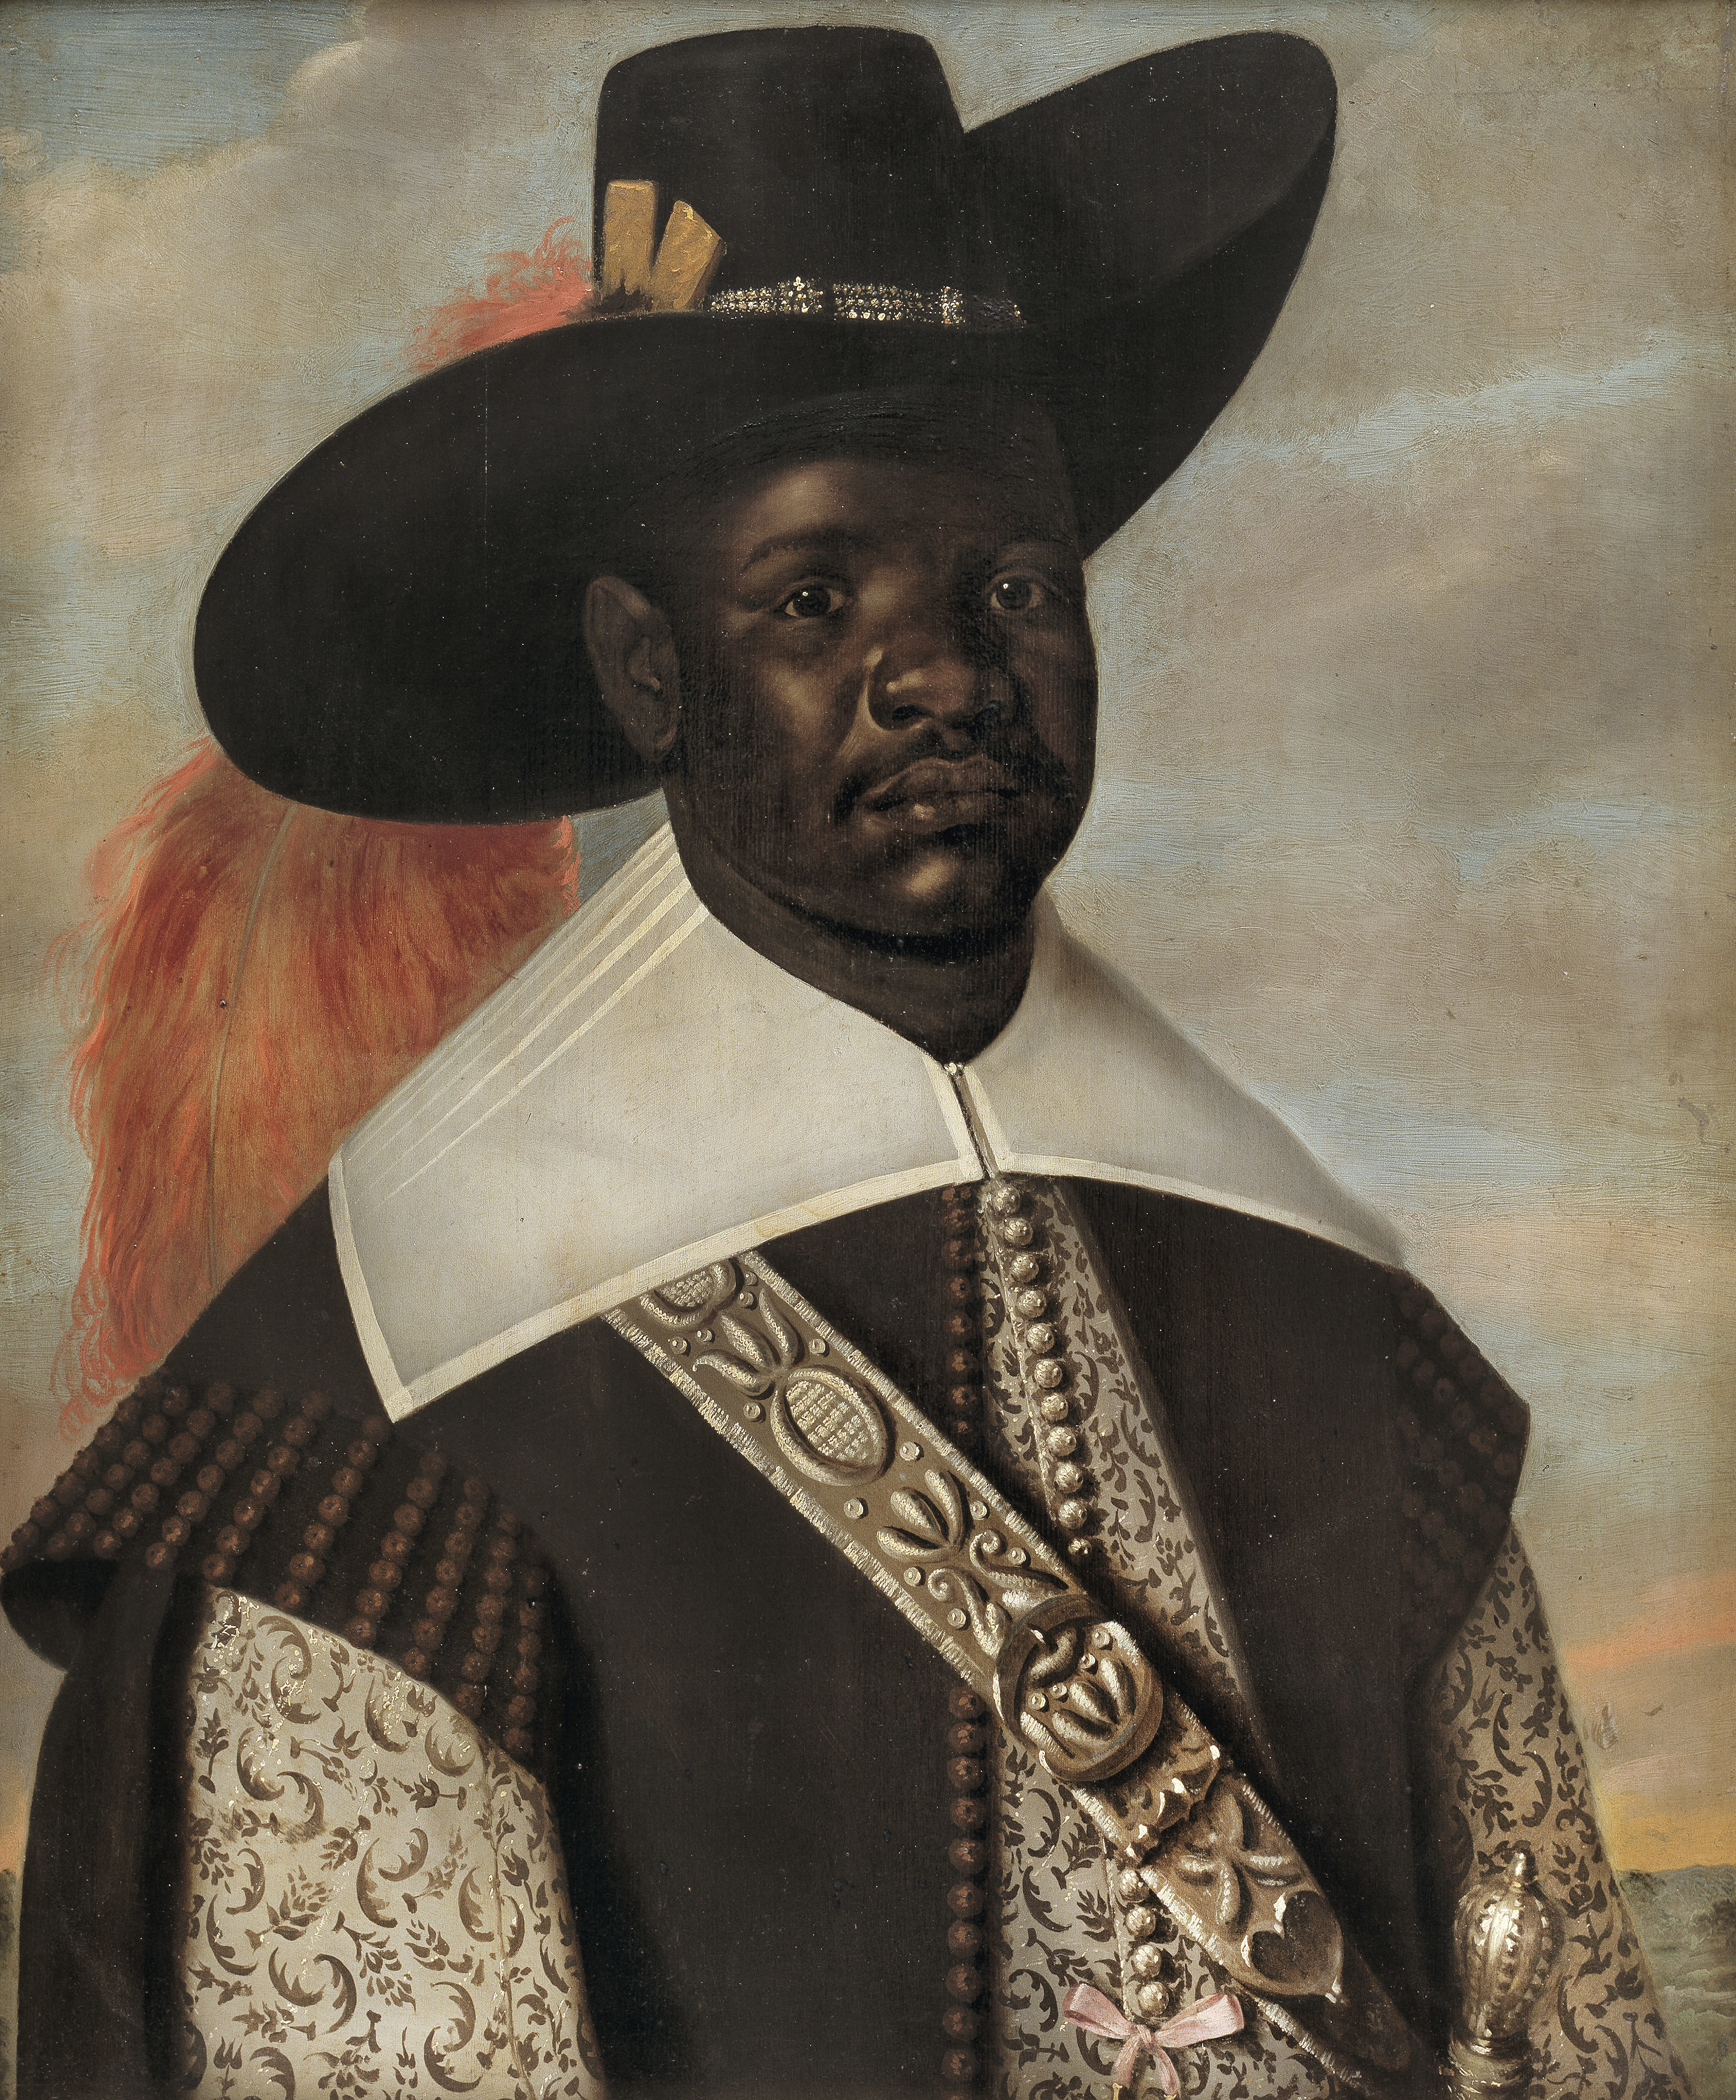 Don Miguel de Castro. Emissary of Kongo by Jaspar Beckx - c. 1643 - 75 x 62 cm Statens Museum for Kunst